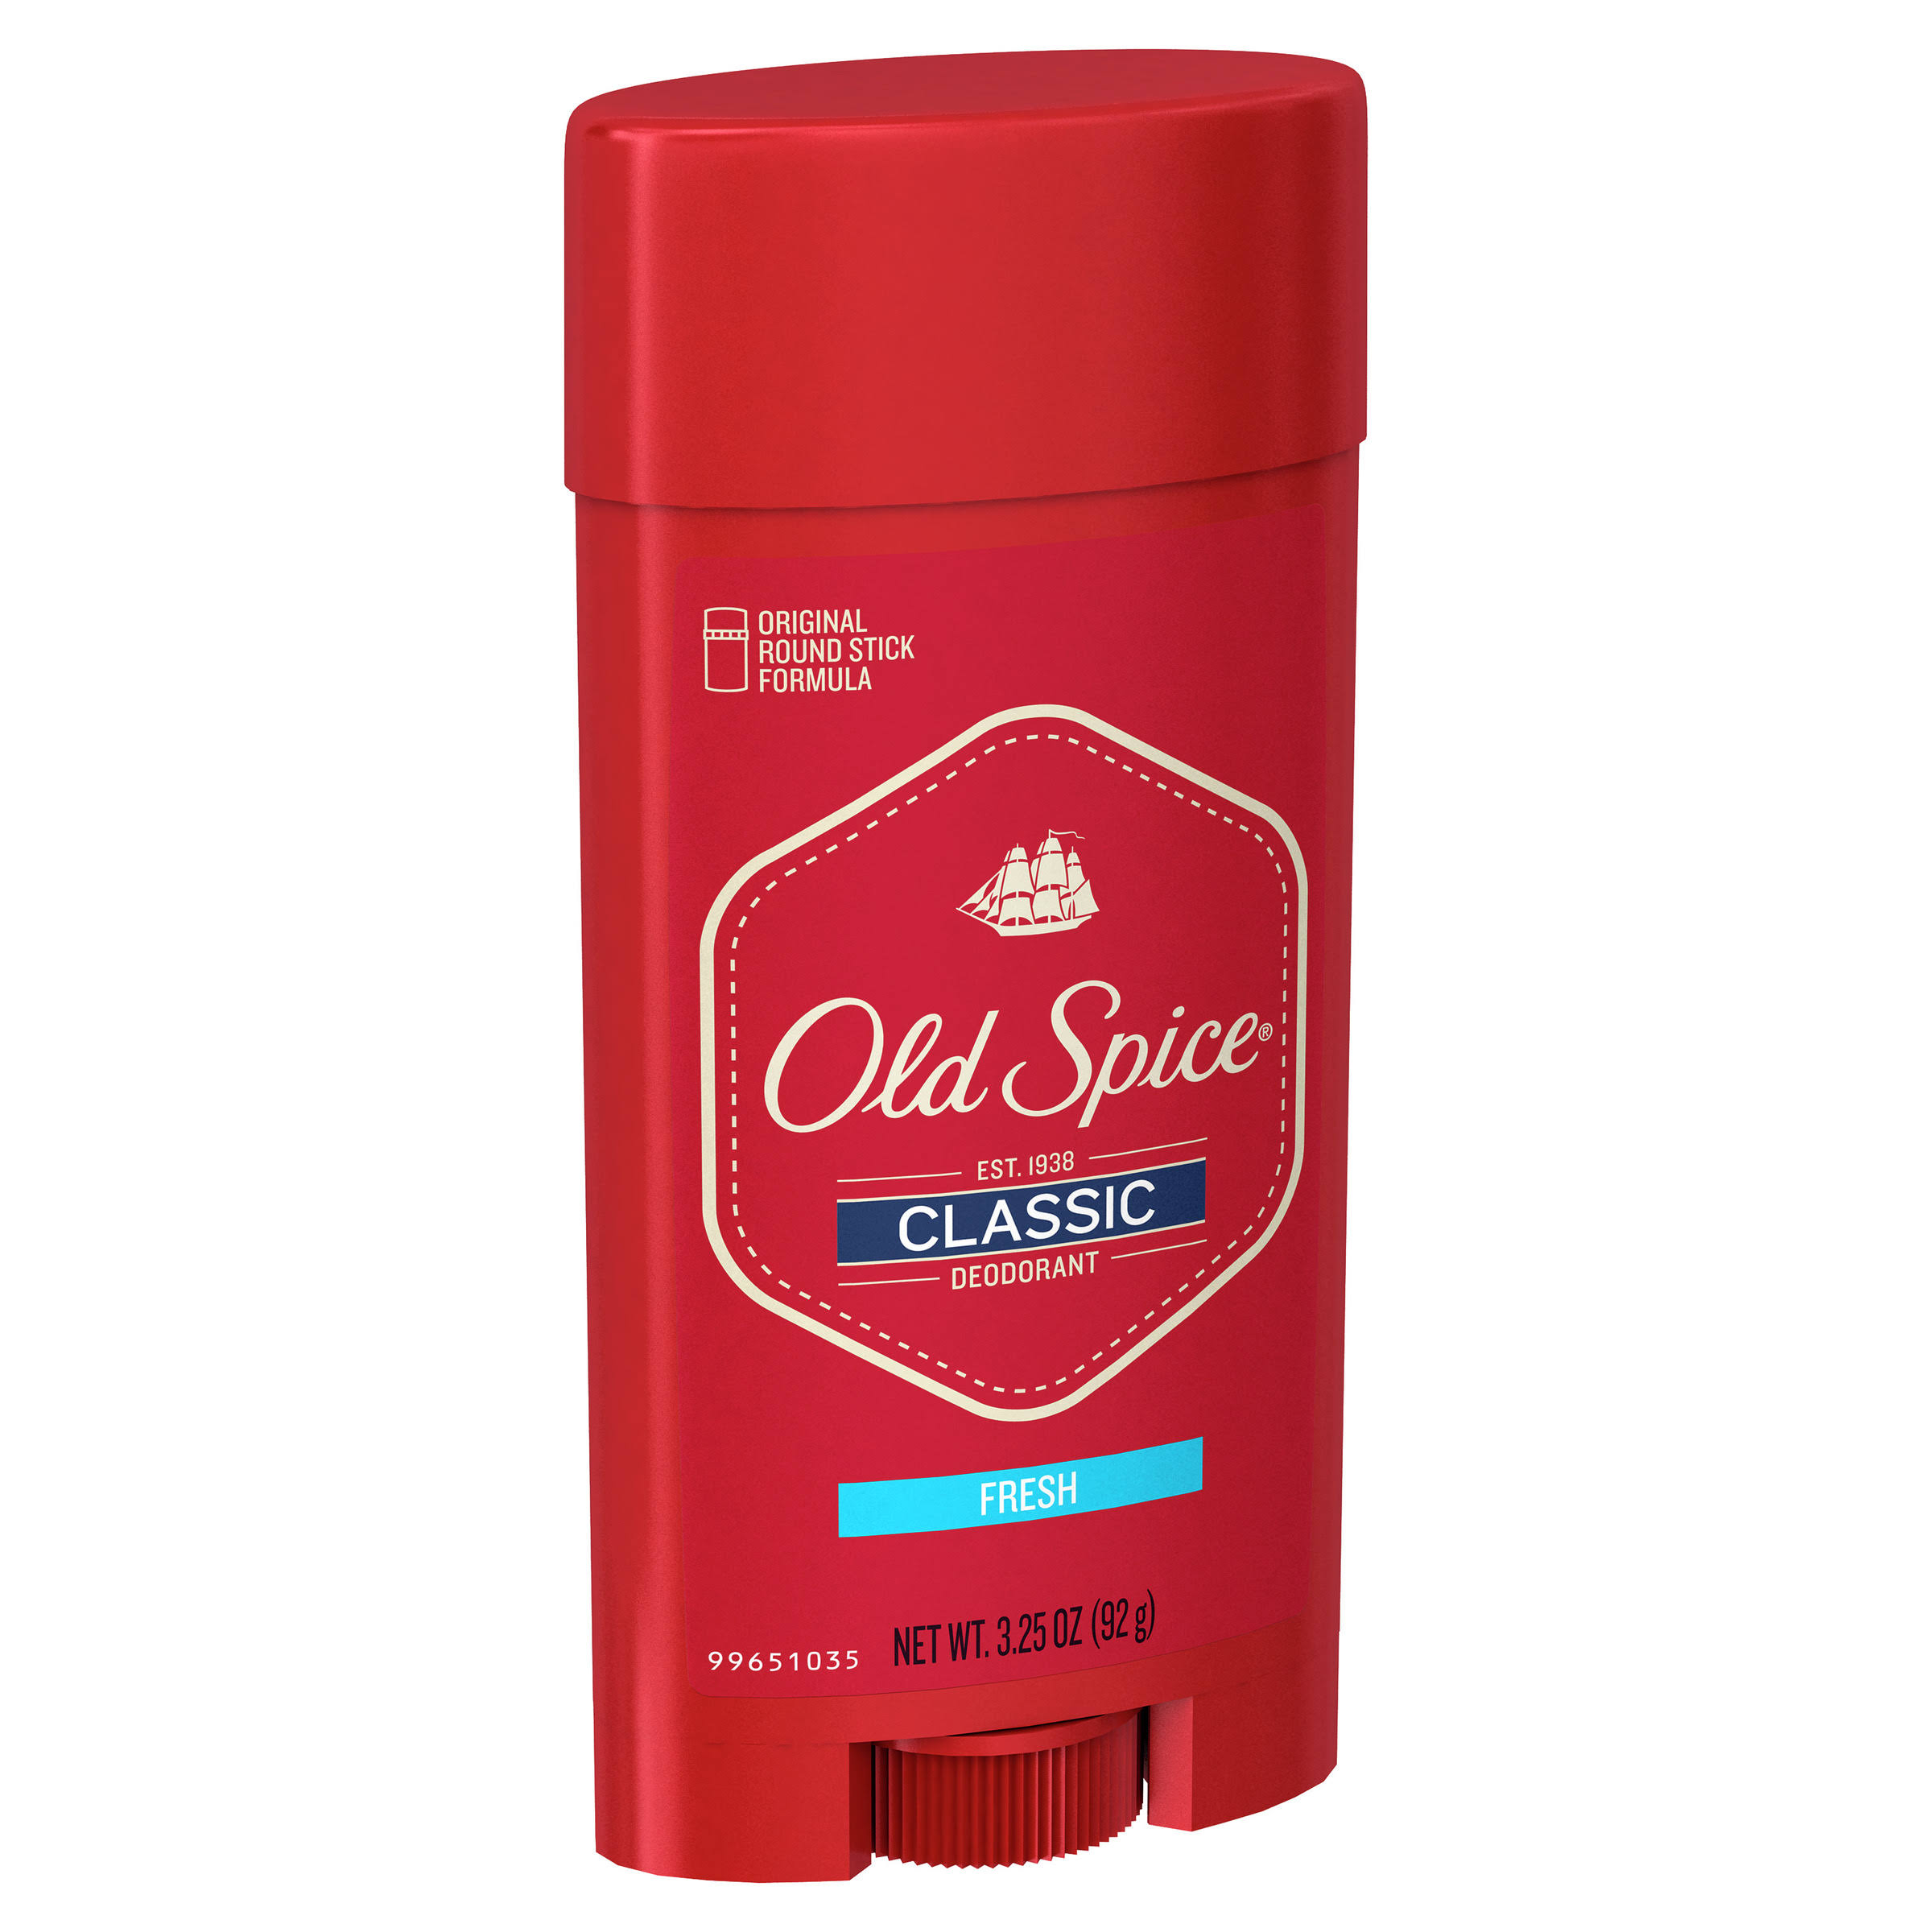 Old Spice Classic Deodorant Stick - 92g, Fresh Scent